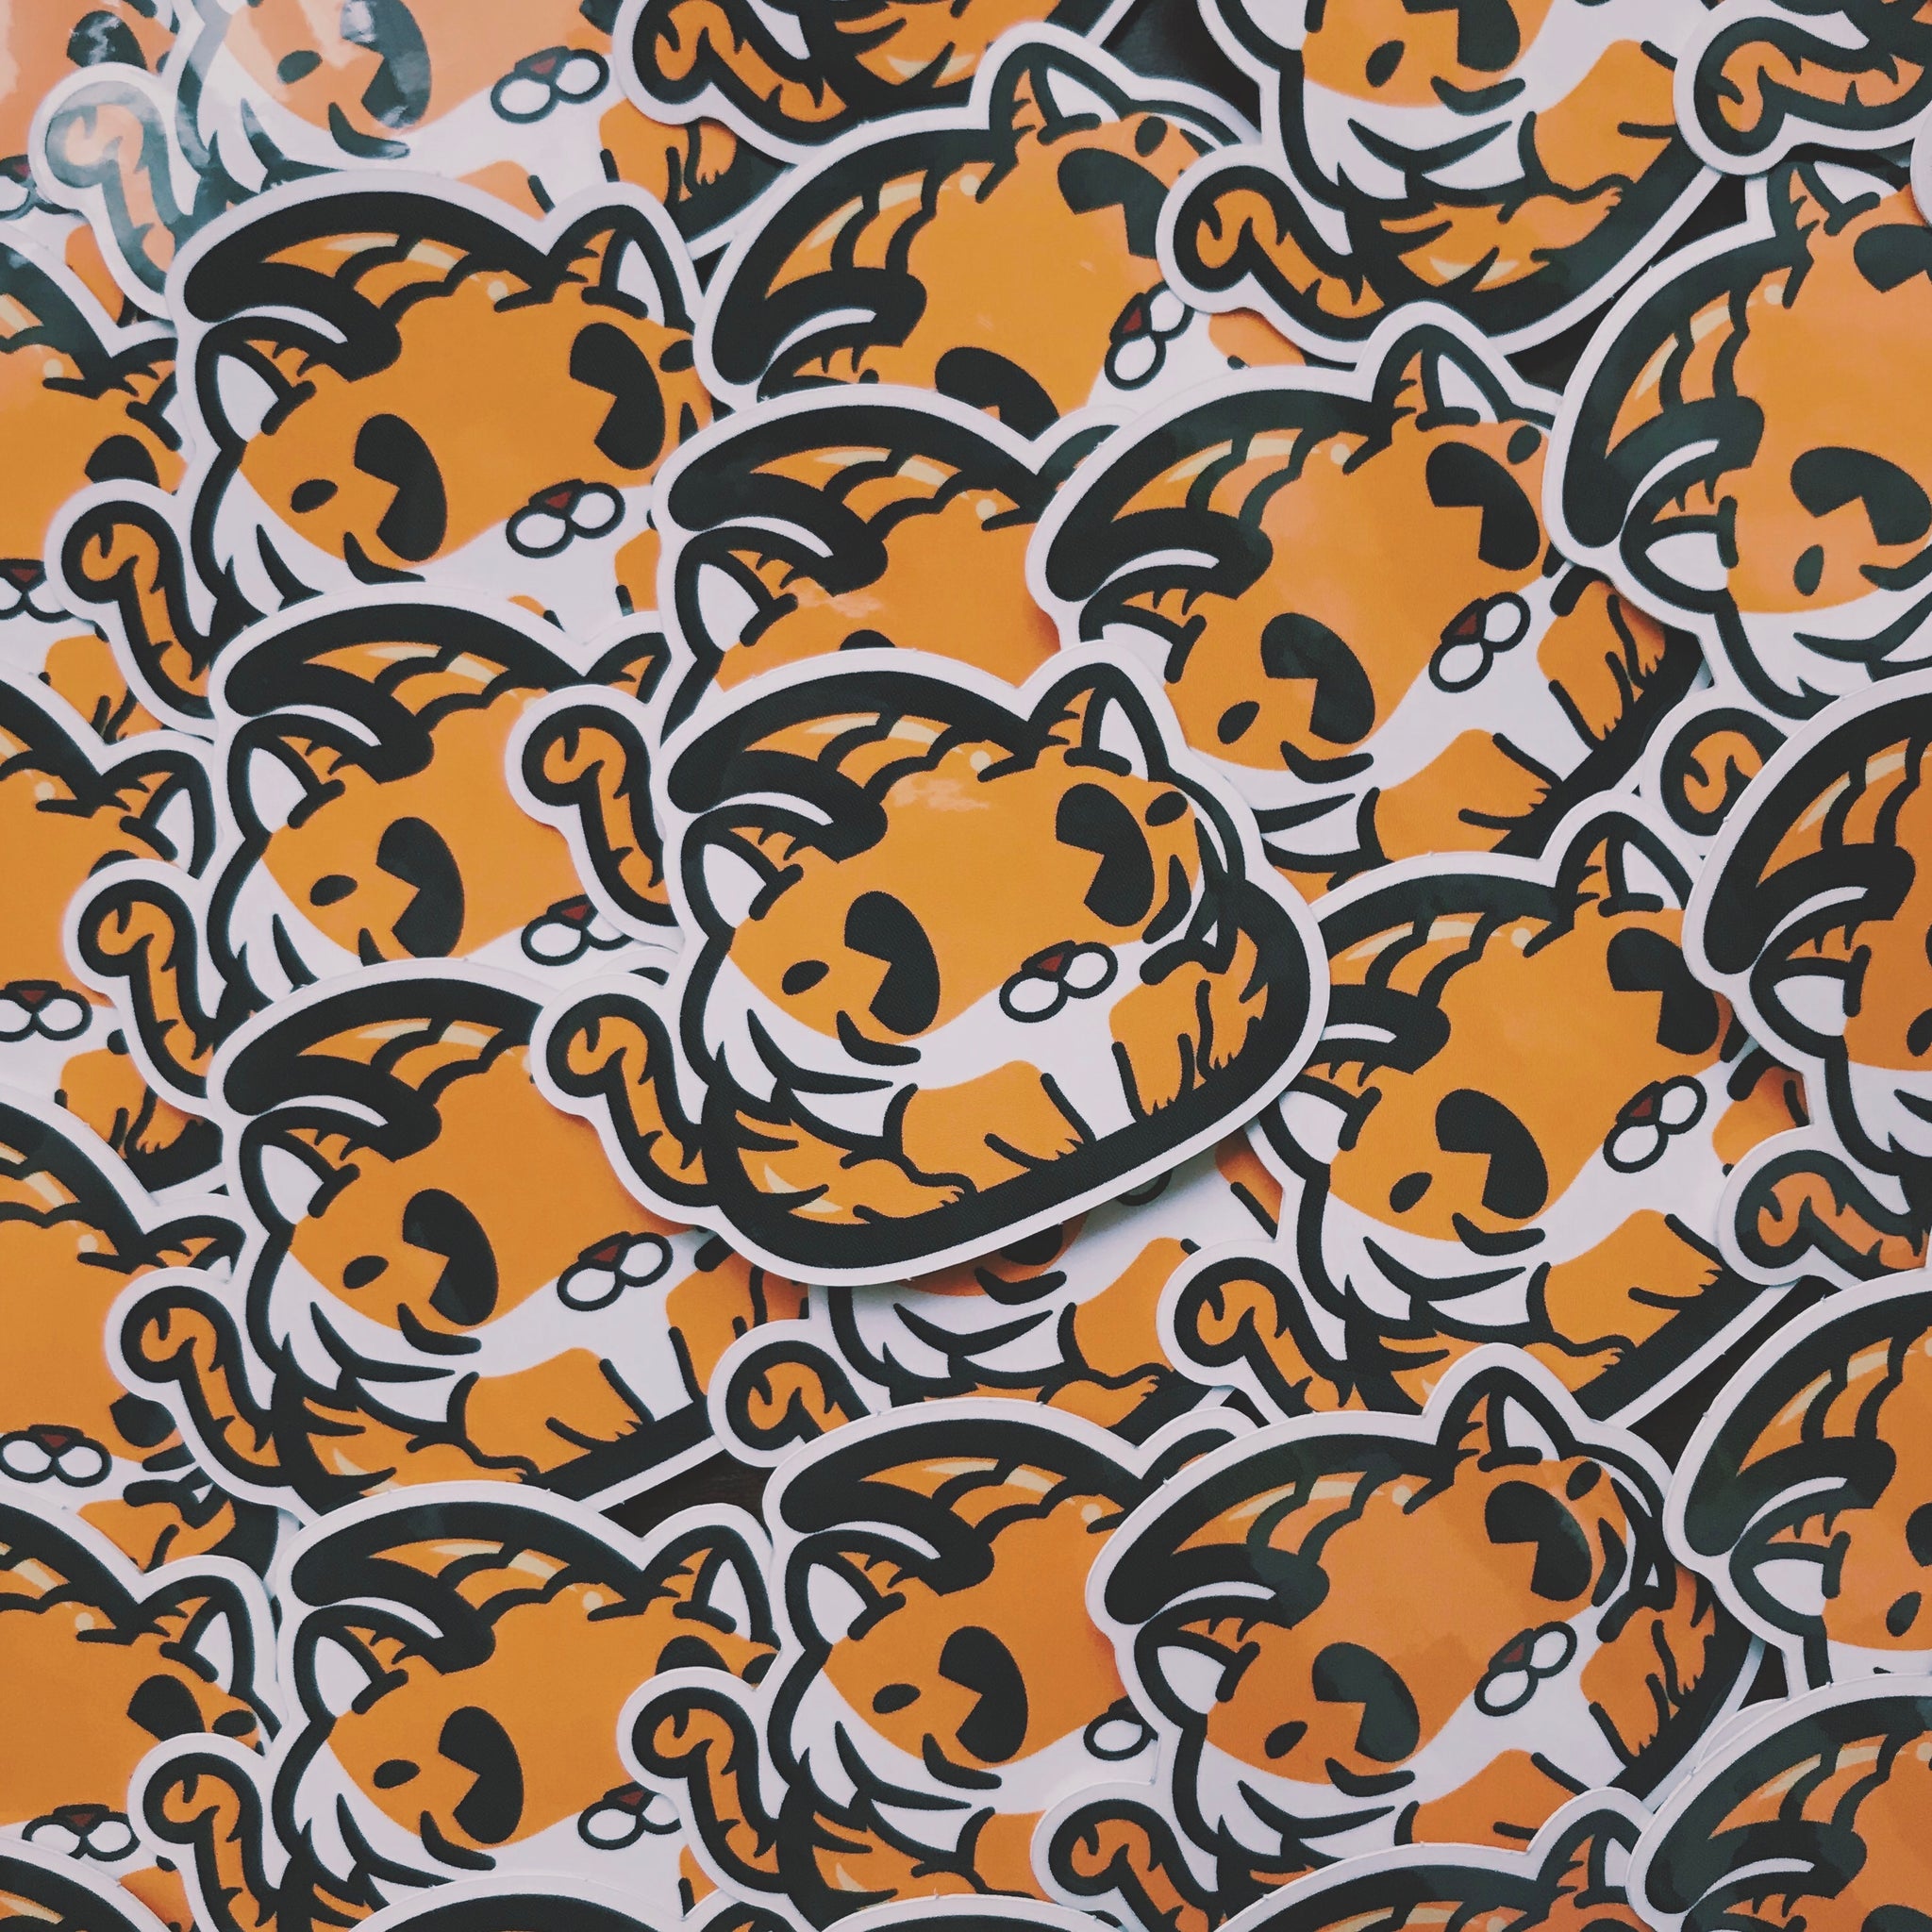 Tiger Poo Sticker